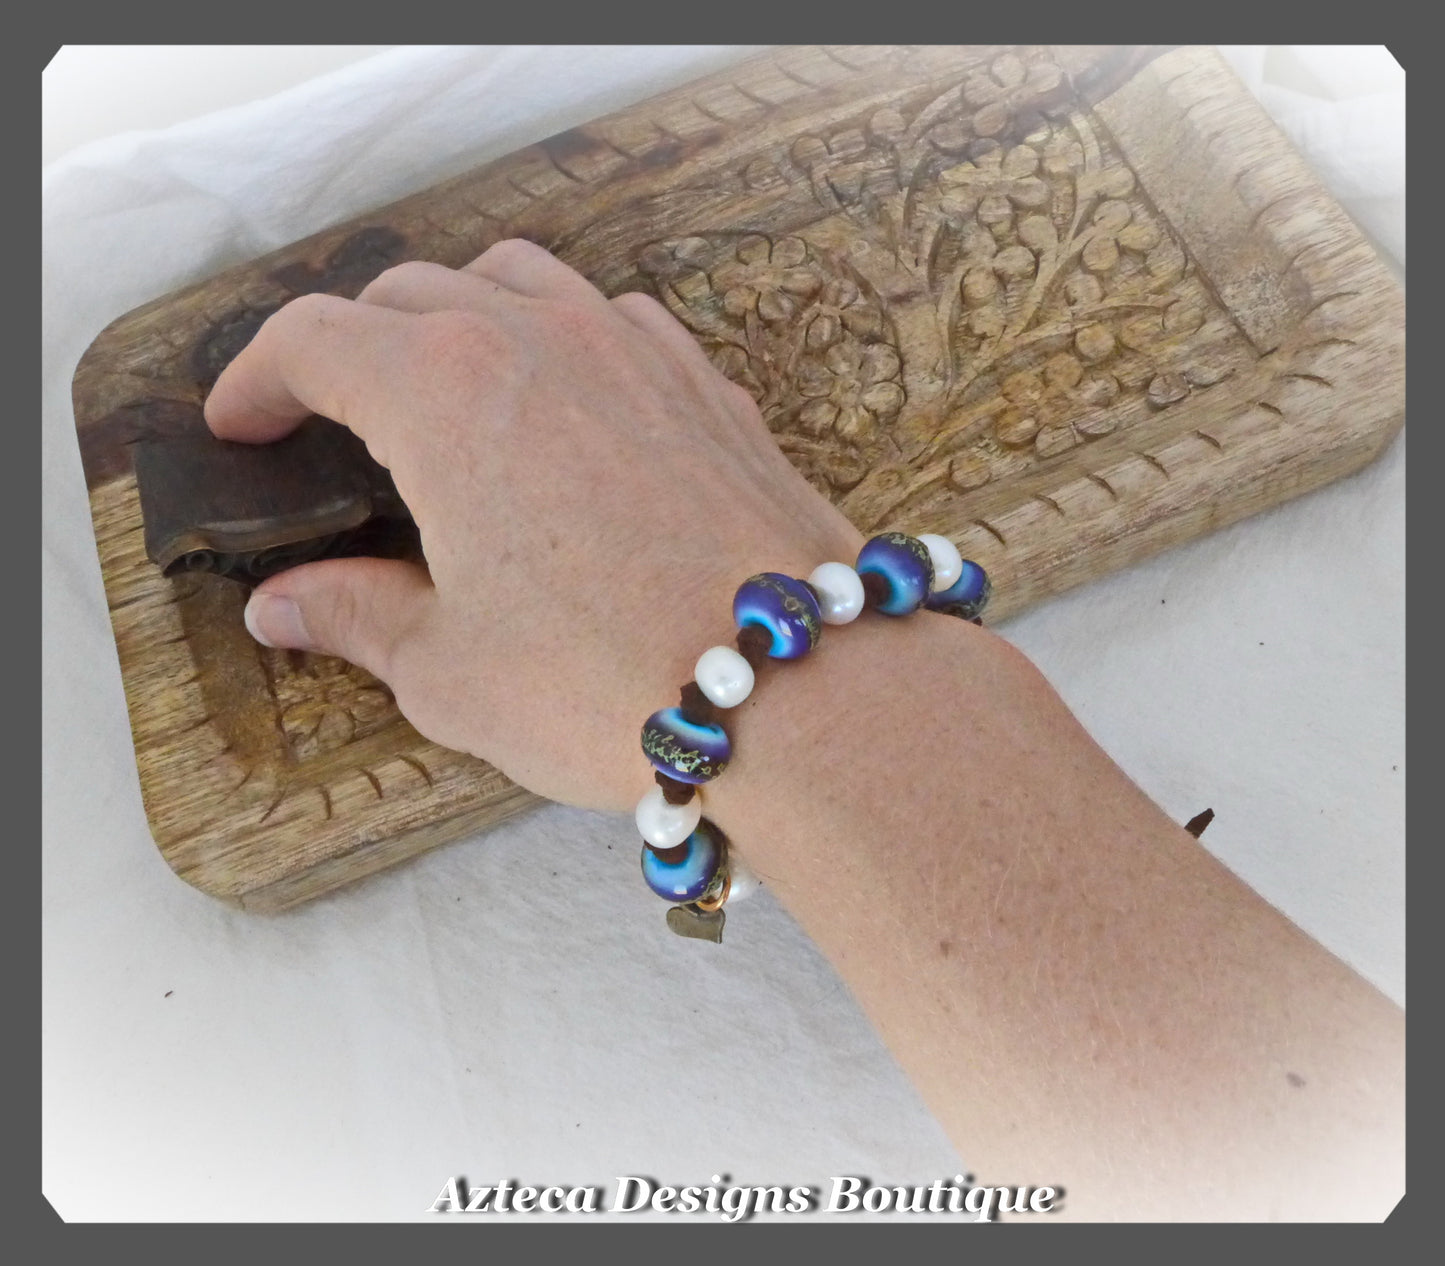 Rustic Pearl Bracelet + Vegan Suede + Lampwork Glass Beads